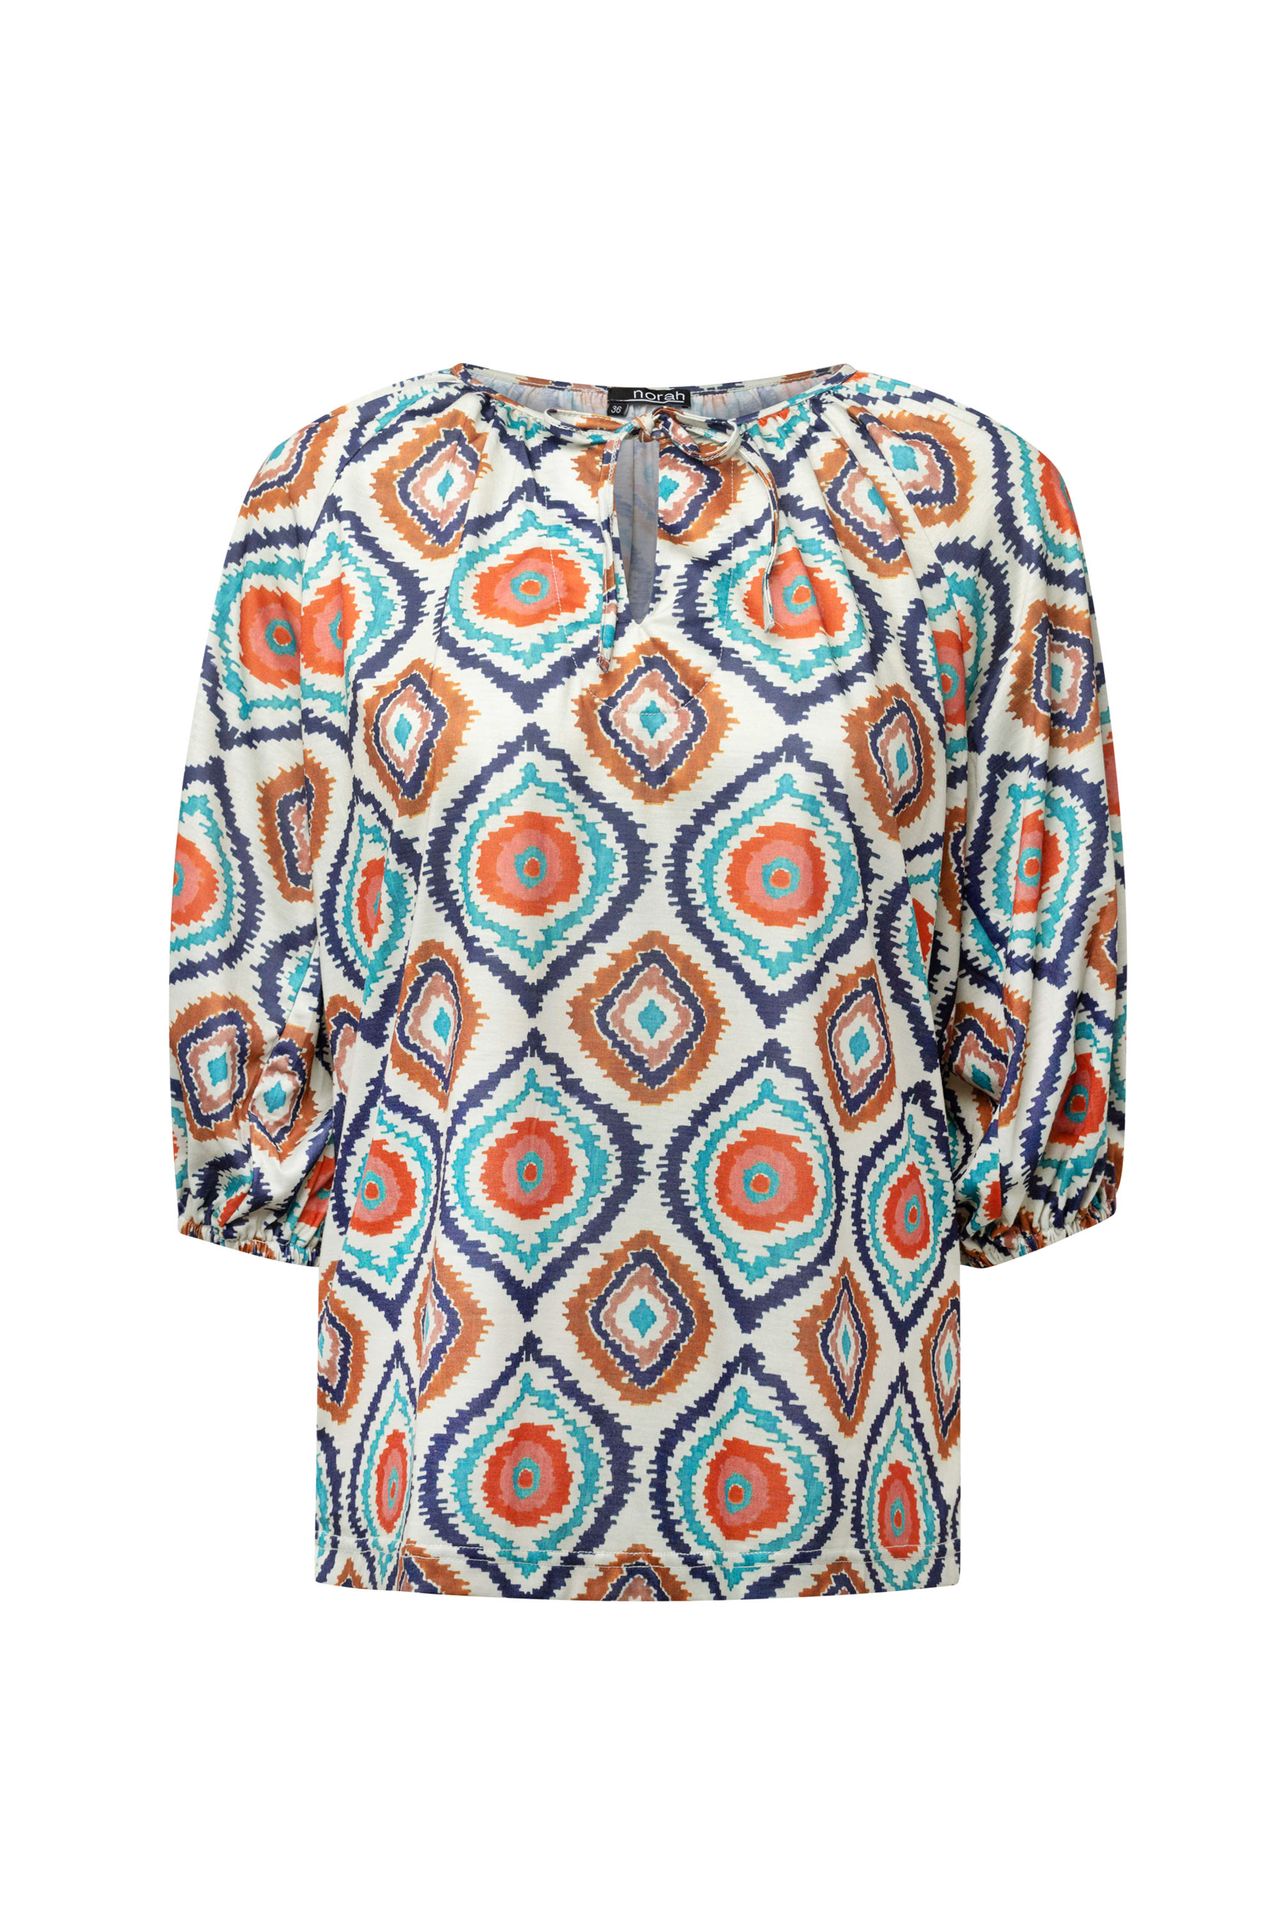 Norah Shirt met koordjes multicolor 214275-002